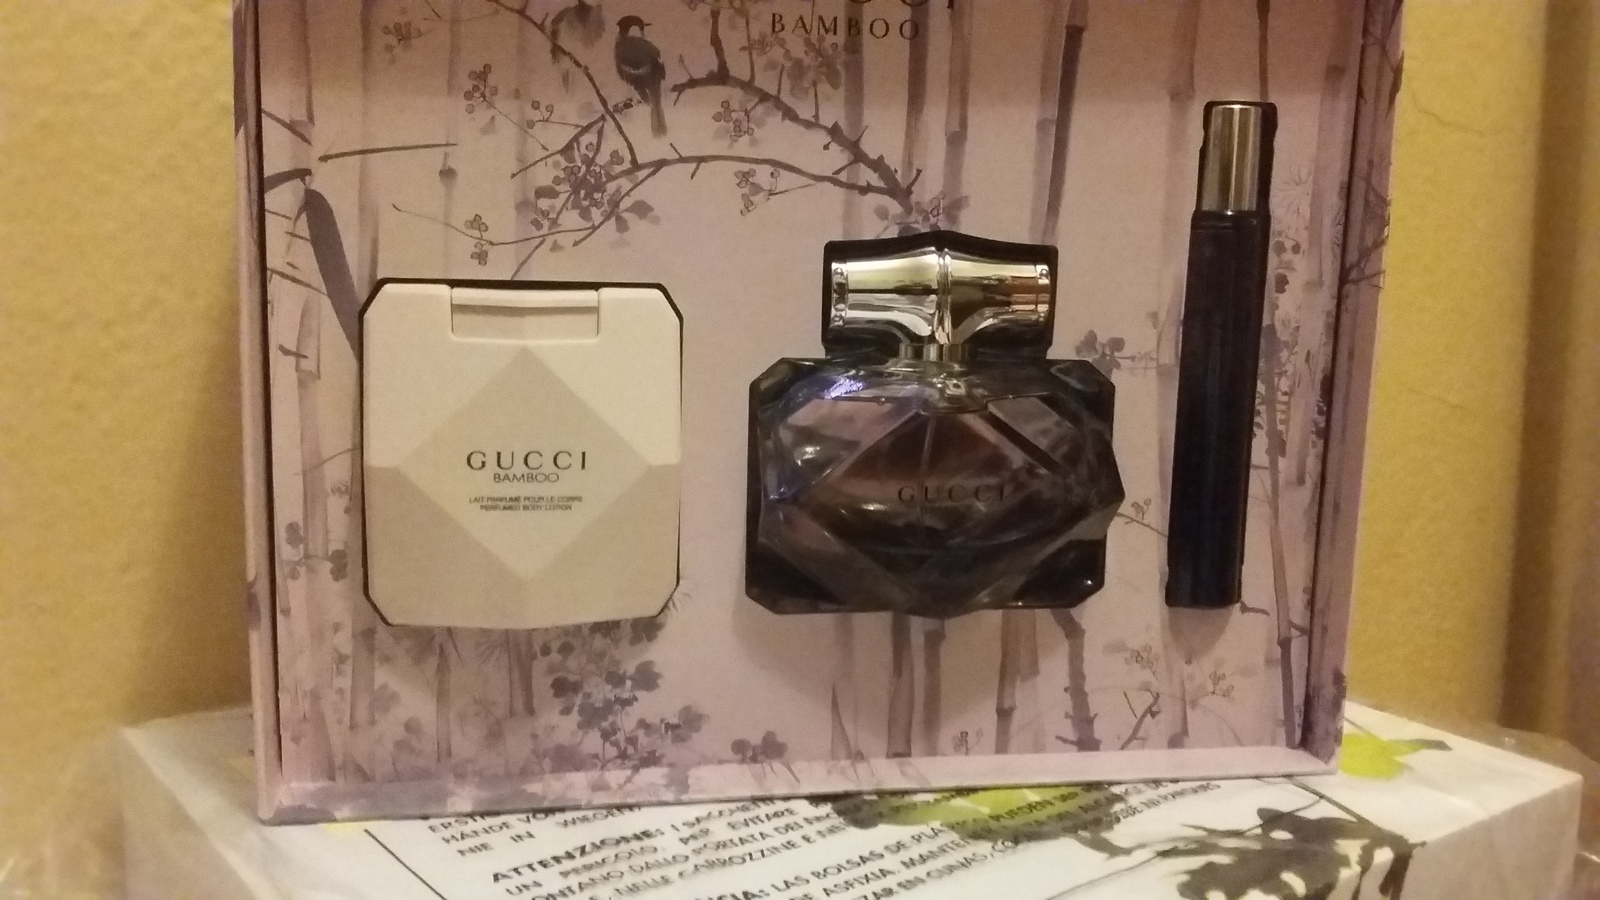 Gucci bamboo perfume and body cream set